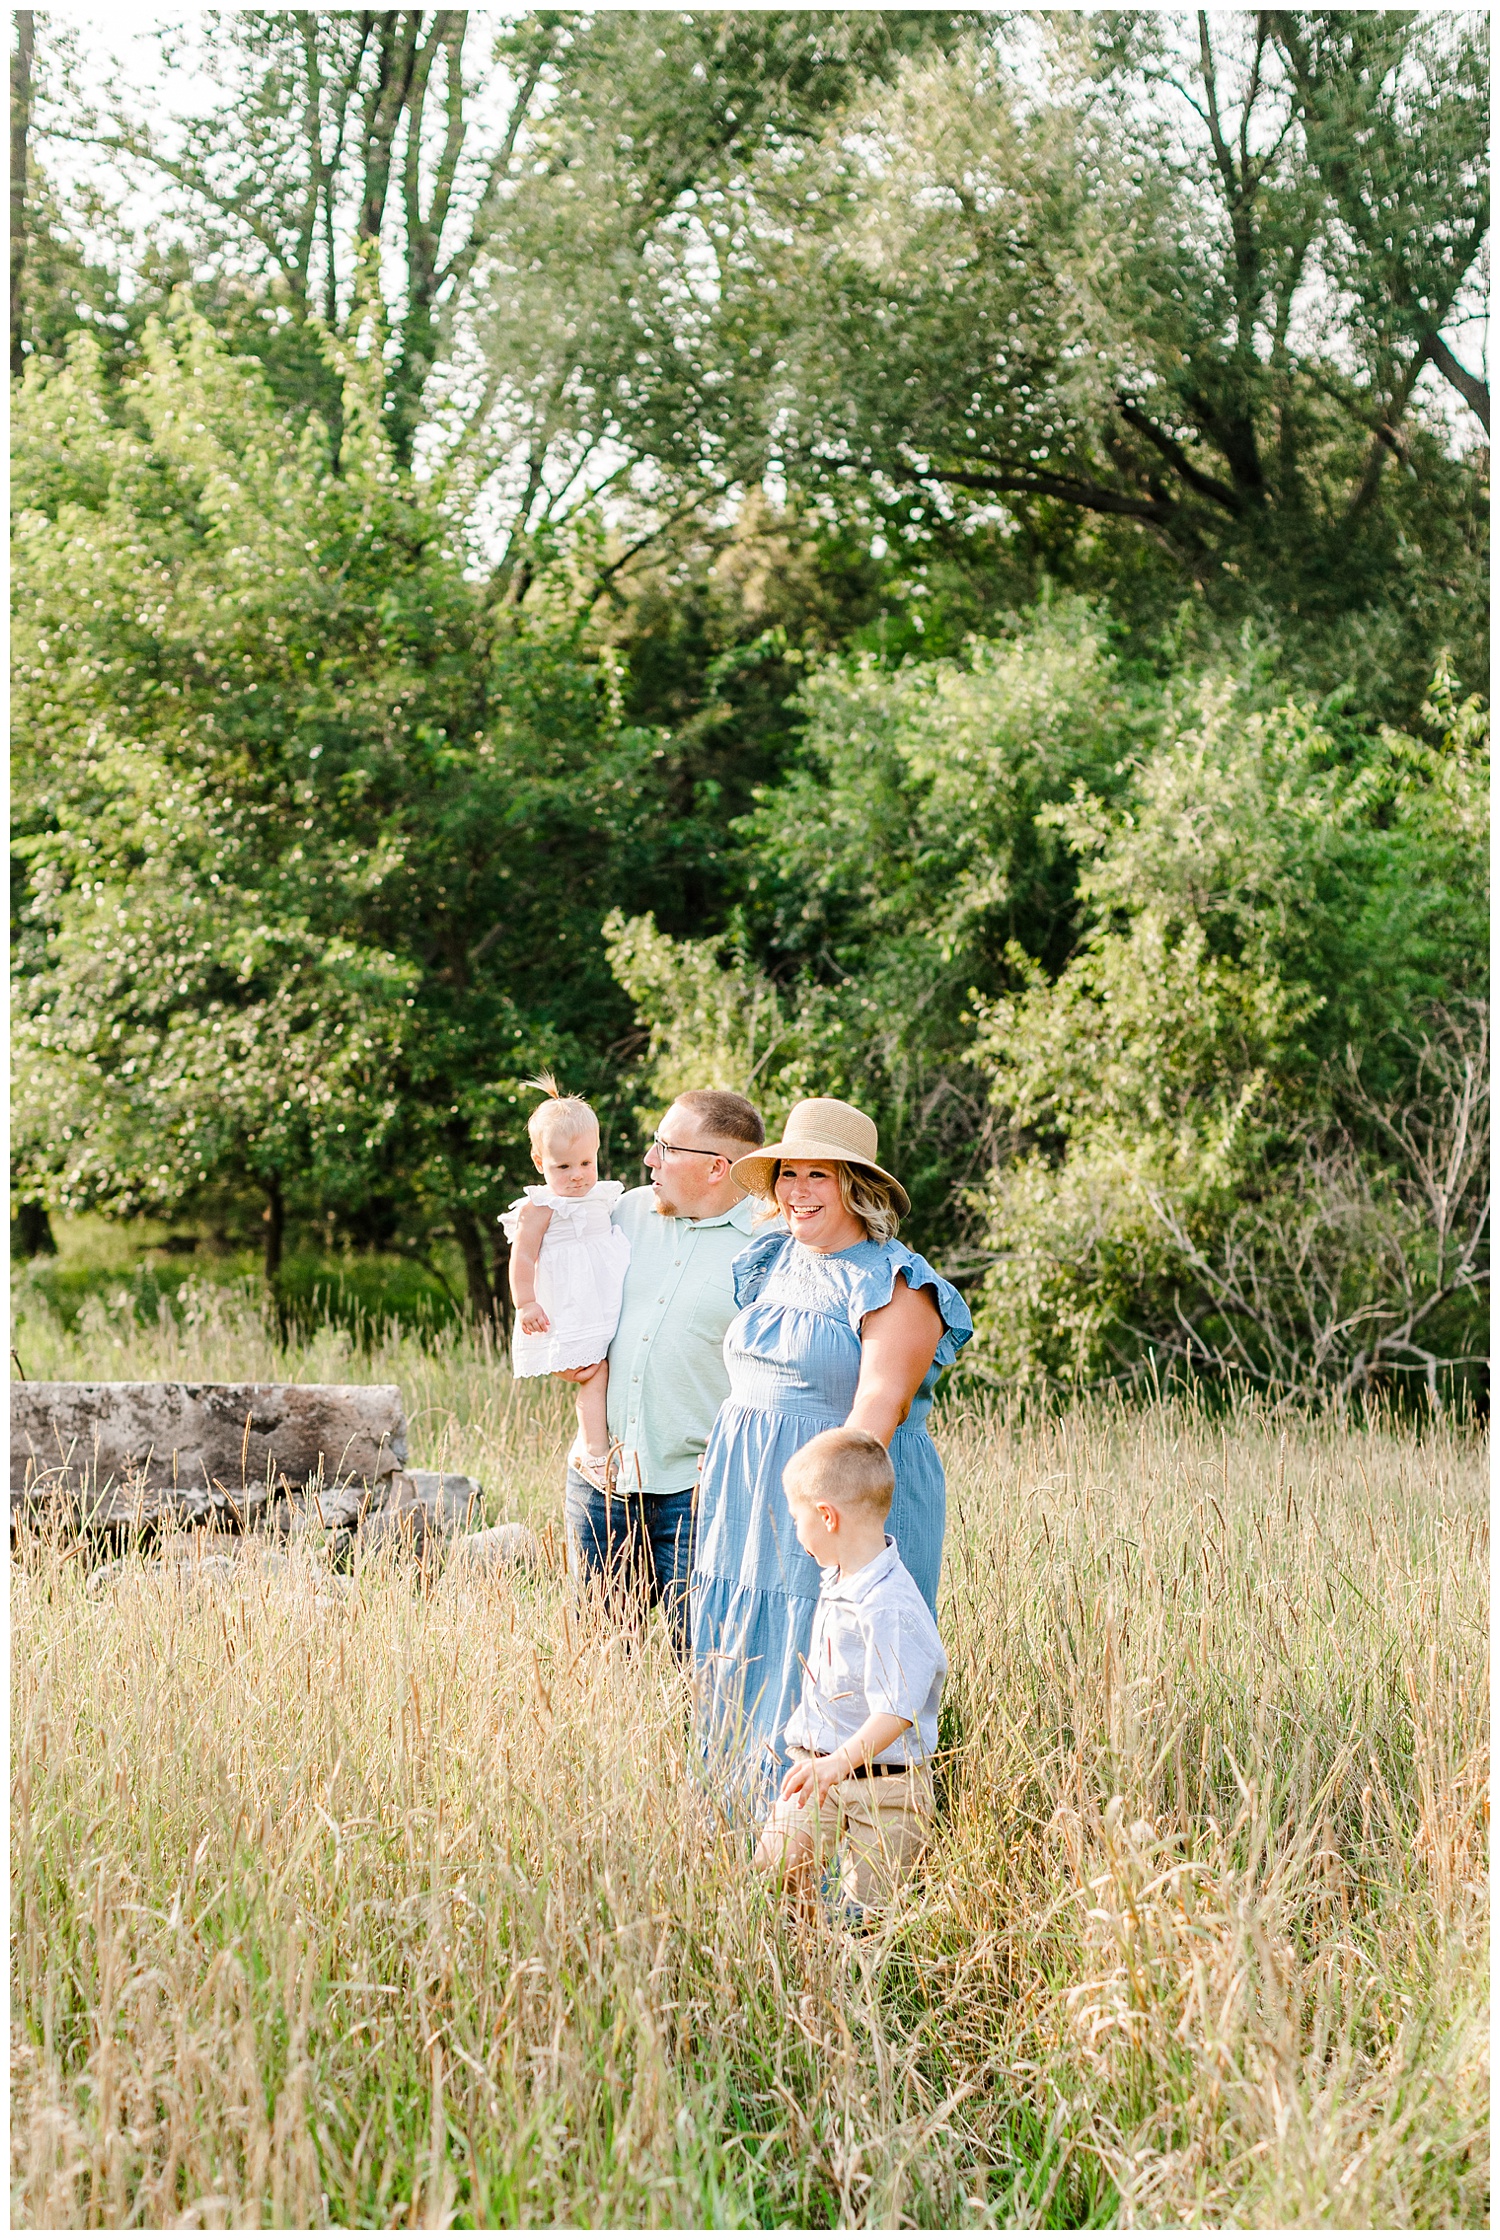 The Bruhn family walk together in a grassy pasture in Iowa | CB Studio